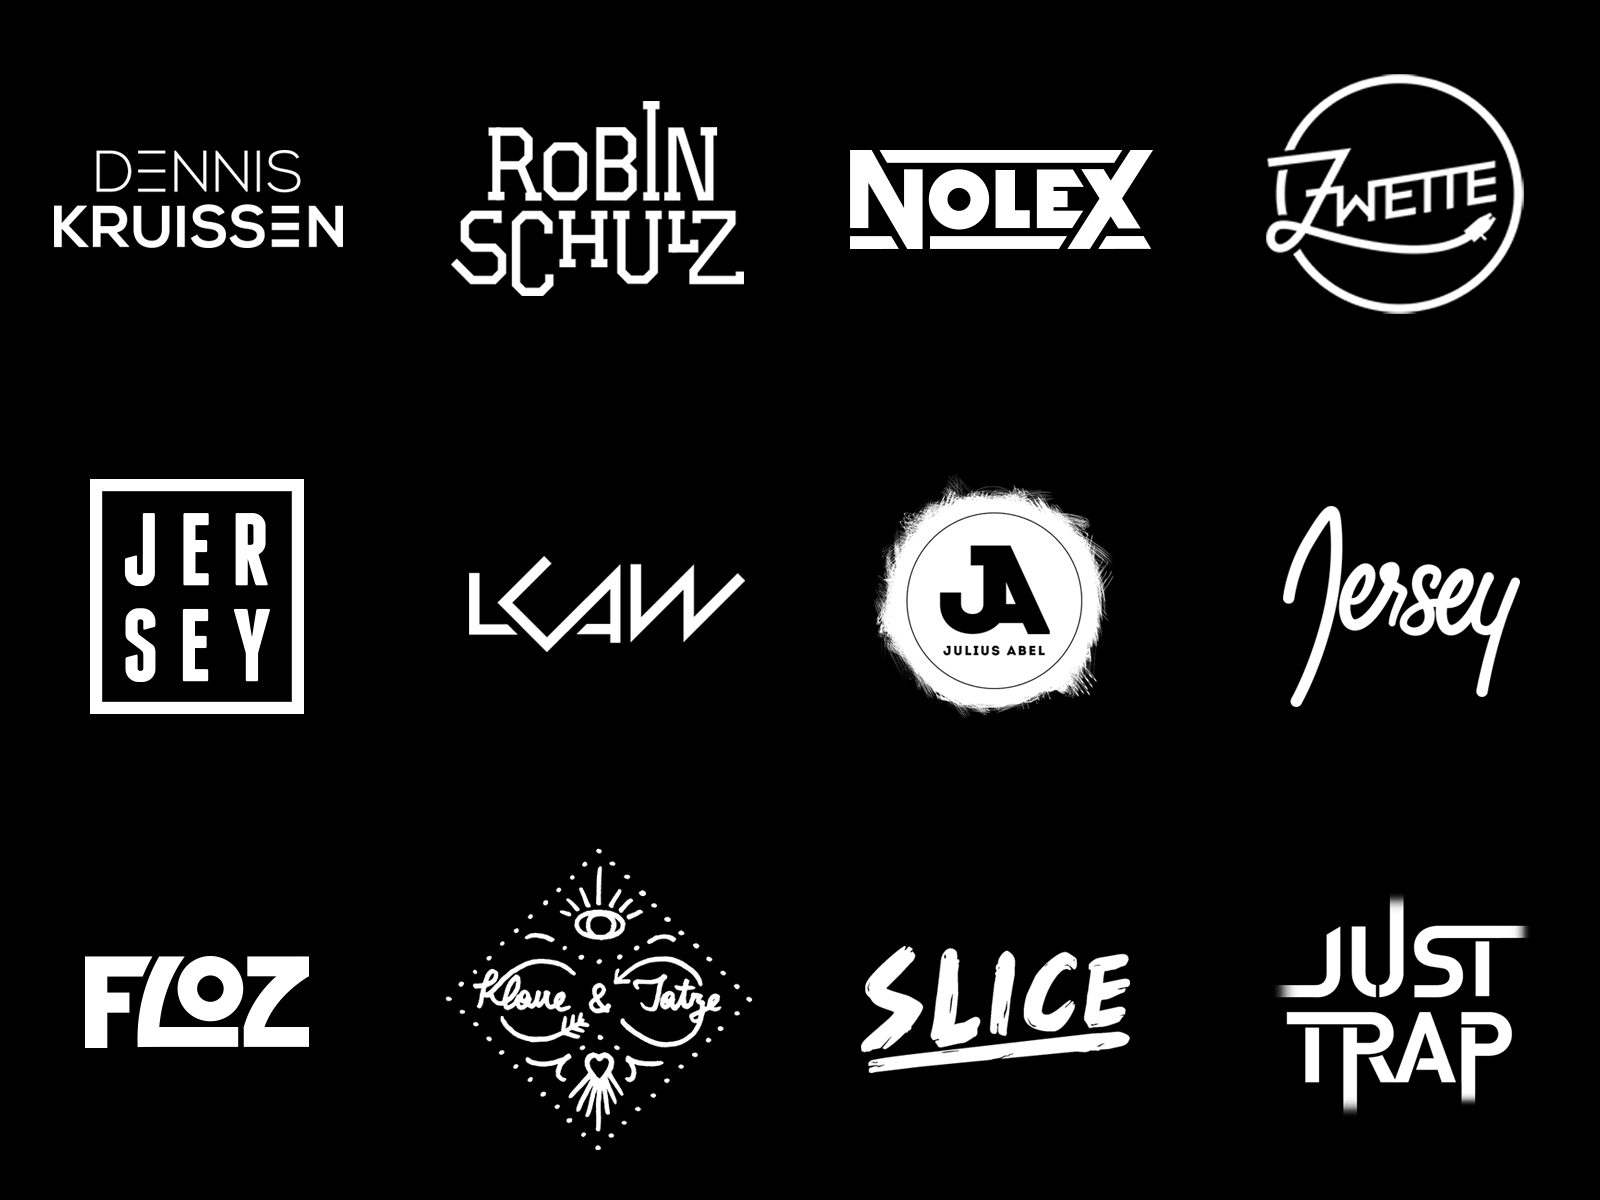 Best DJ Logo - Pin by Devan Welch on tyDi branding examples | Dj logo, Logos, Logo ...